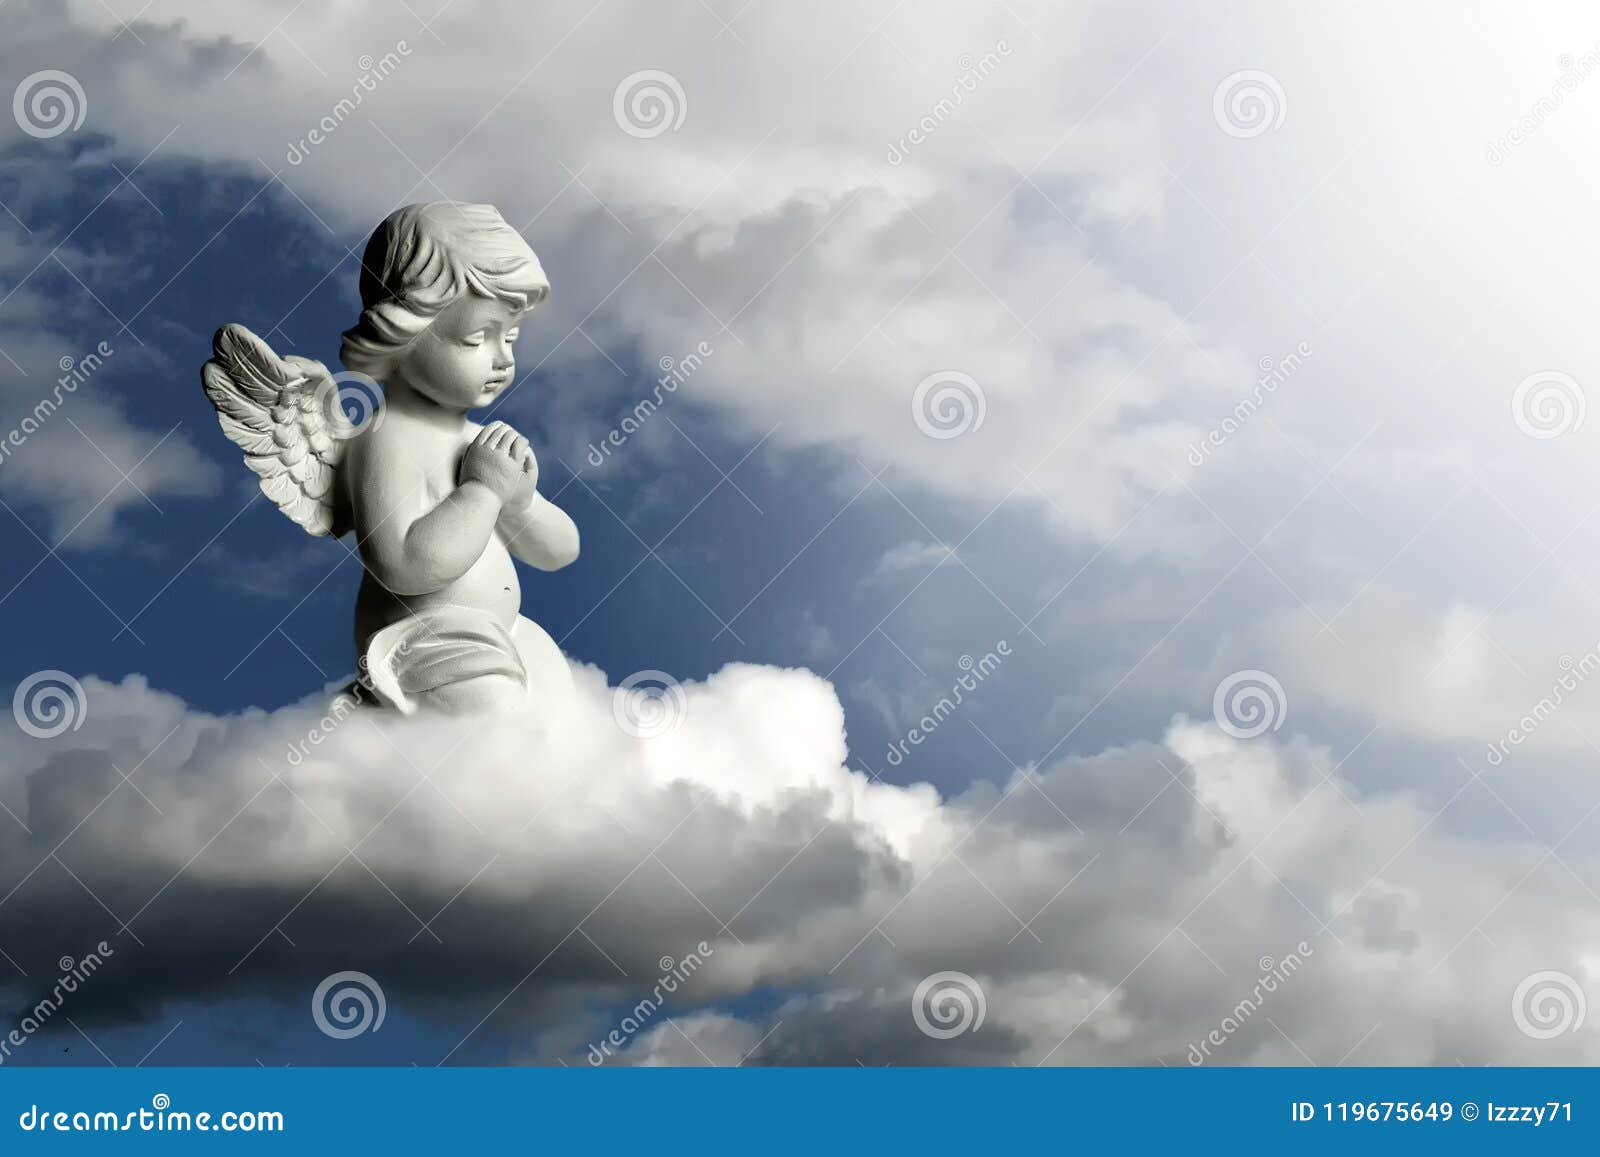 guardian angel kneeling and praying. angel guardian on the cloud